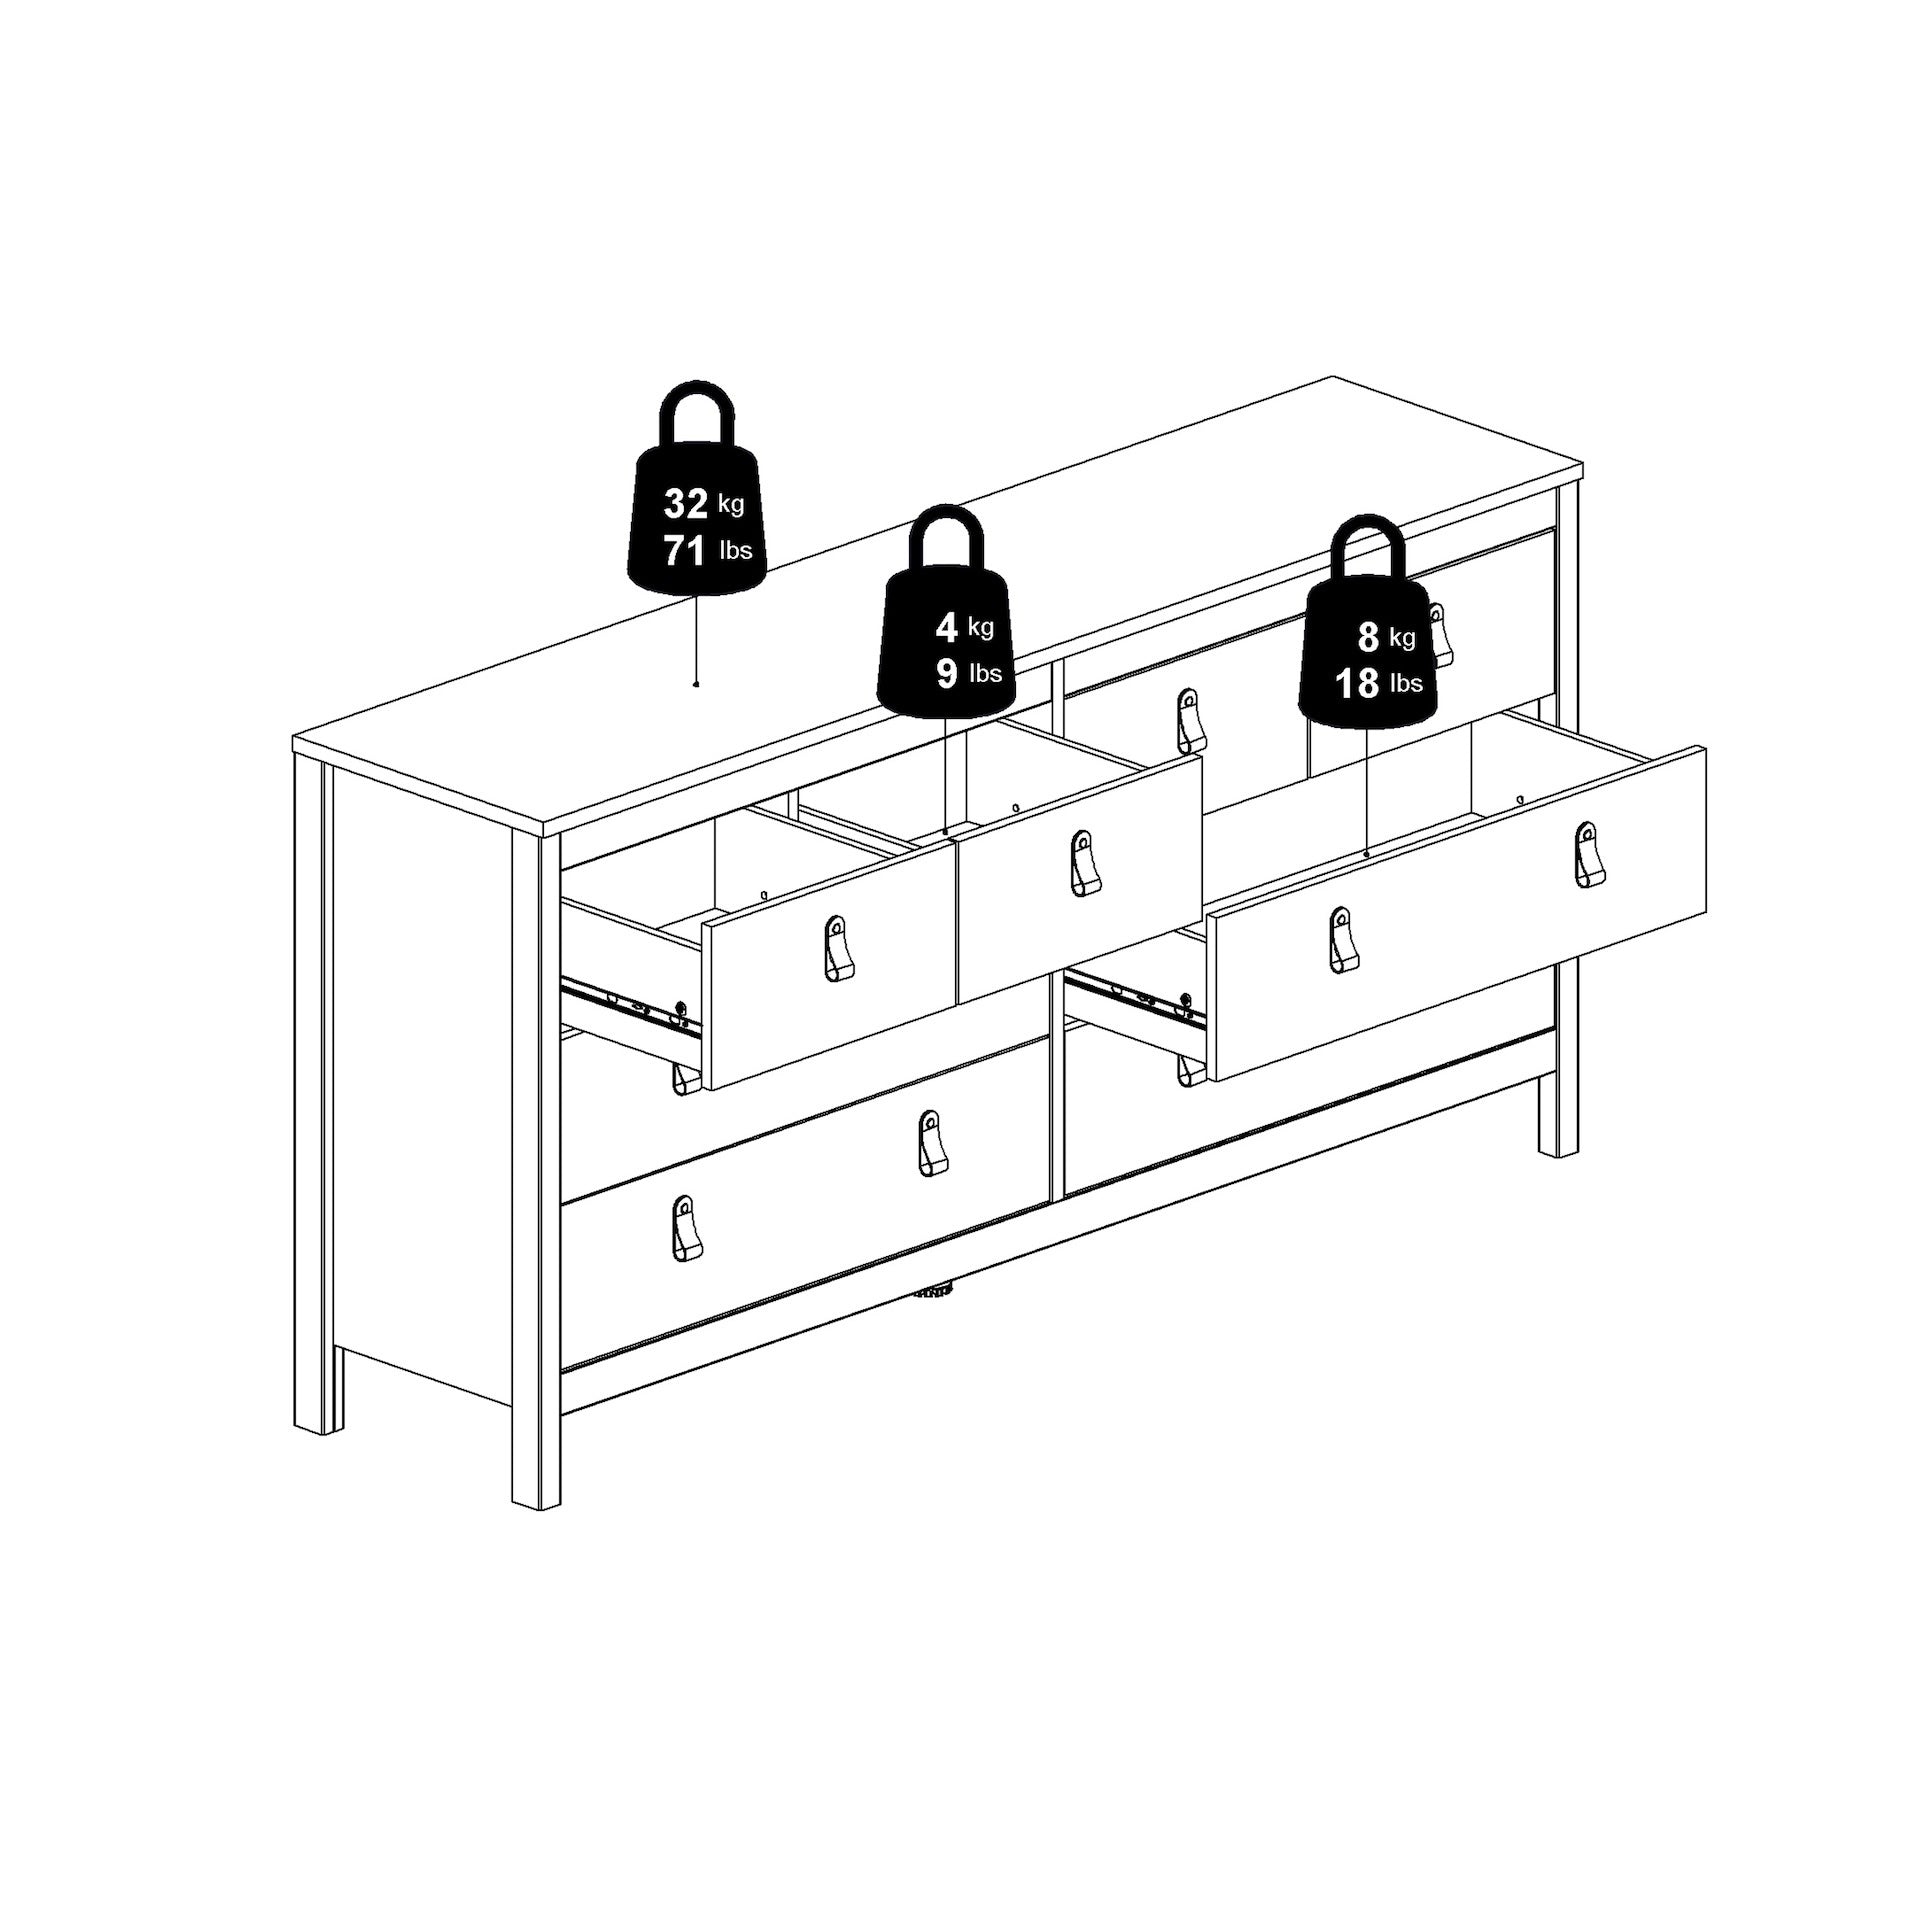 Furniture To Go Madrid Double Dresser 4+4 Drawers in Matt Black